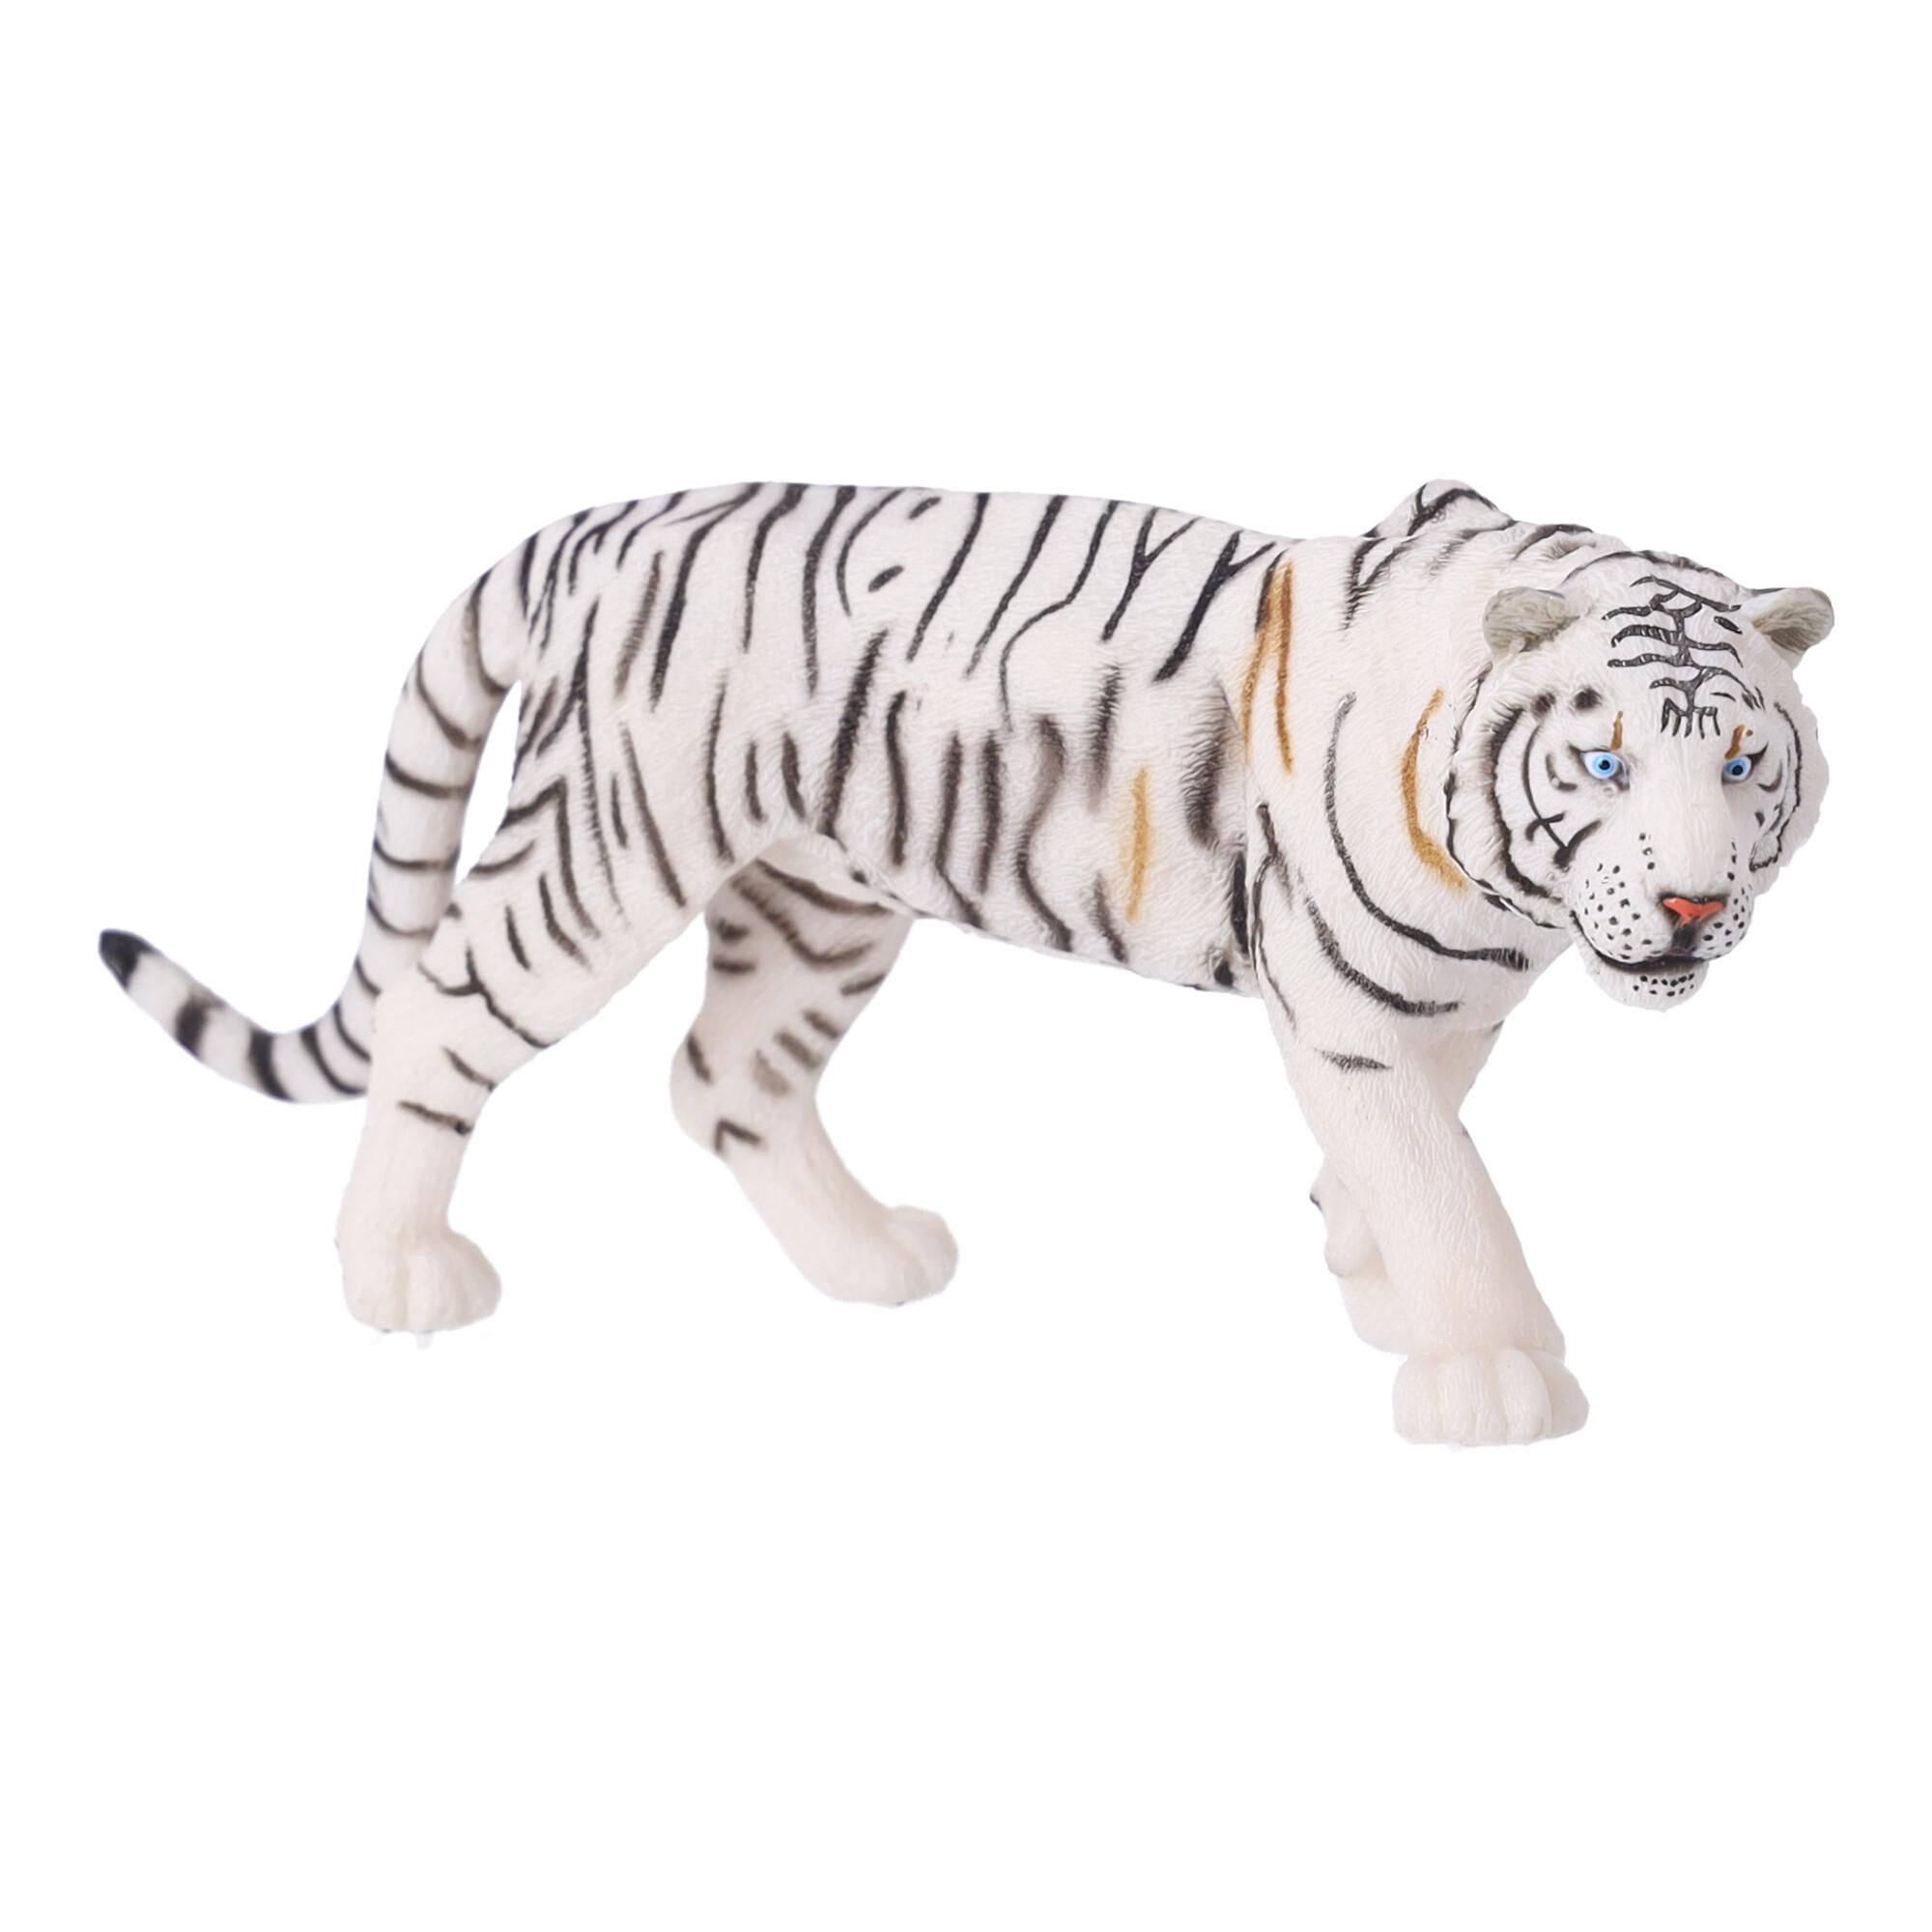 Collectible figurine Tiger white, Papo